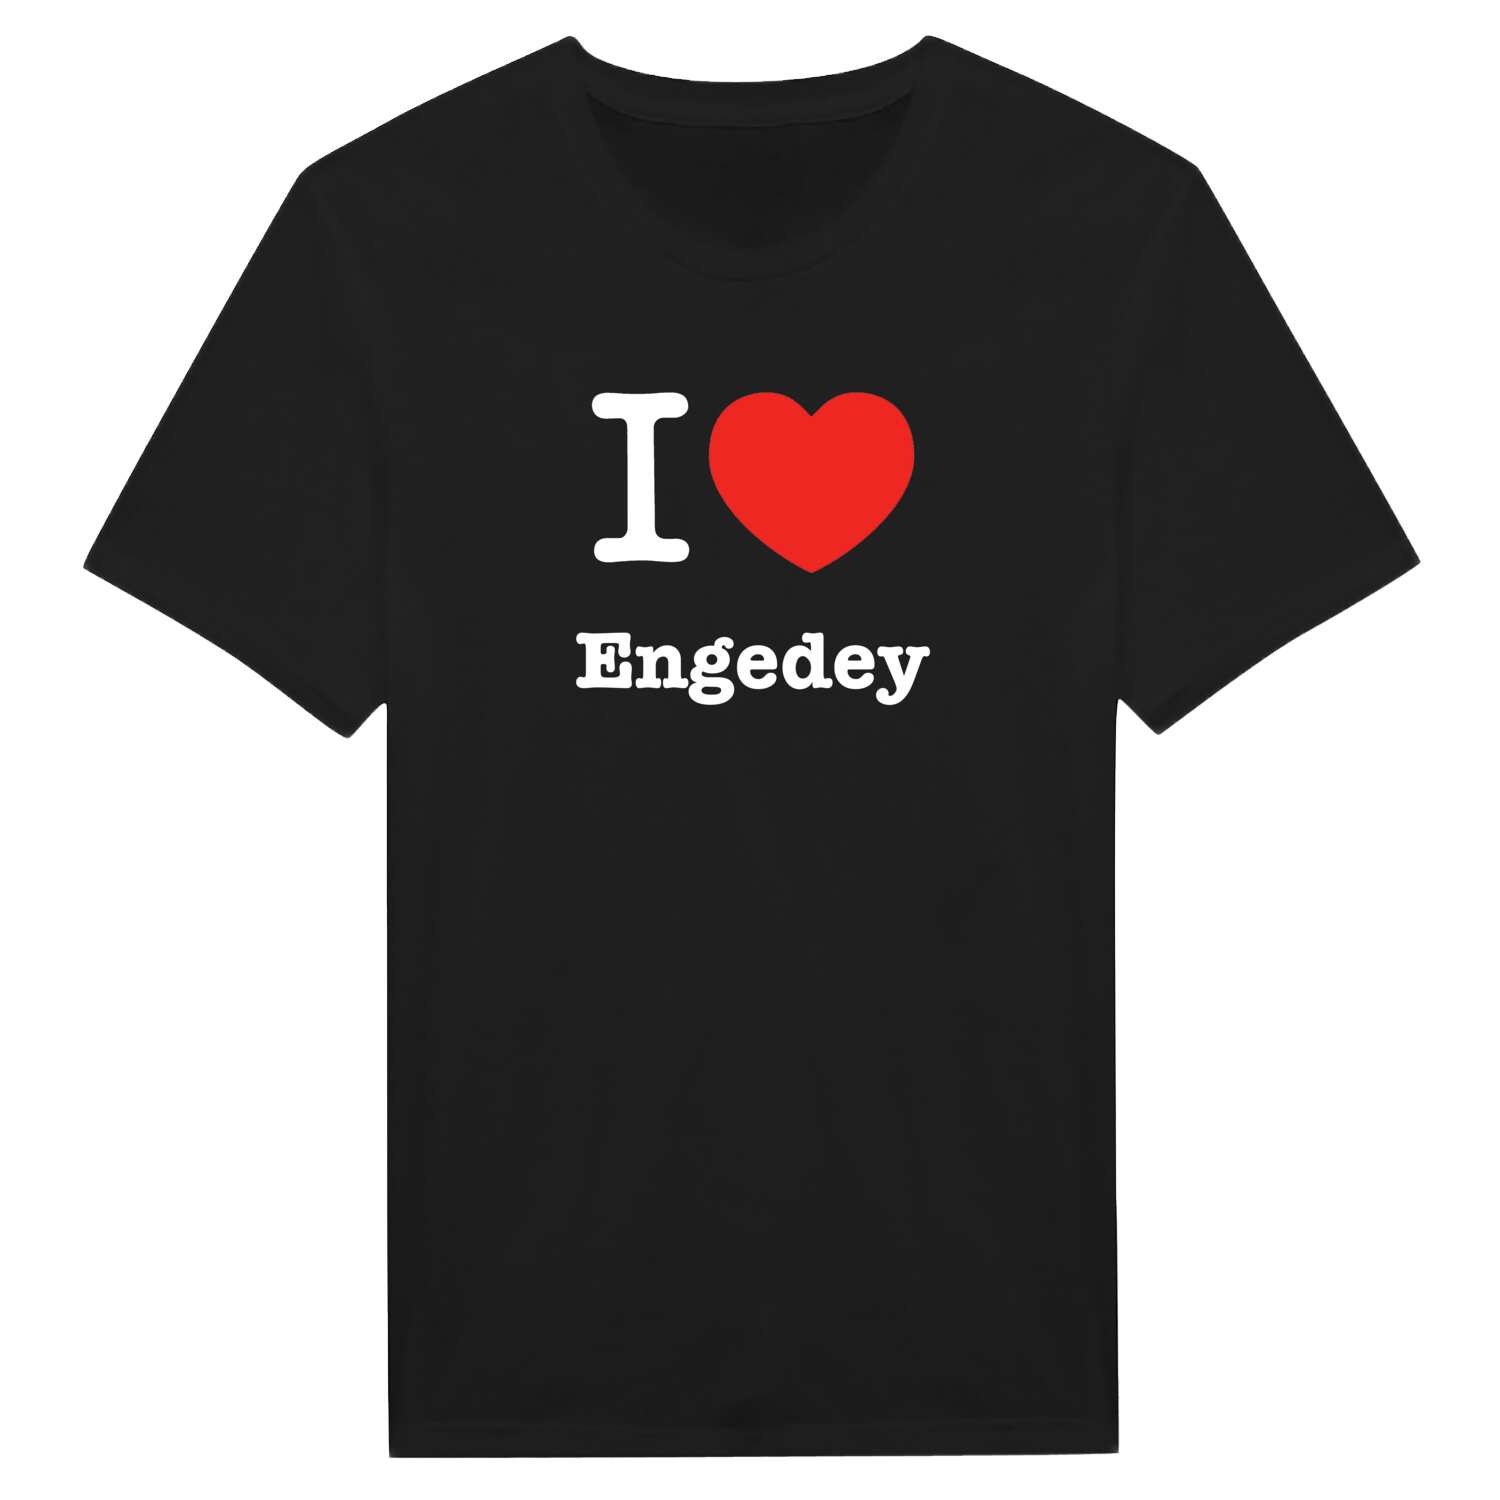 Engedey T-Shirt »I love«